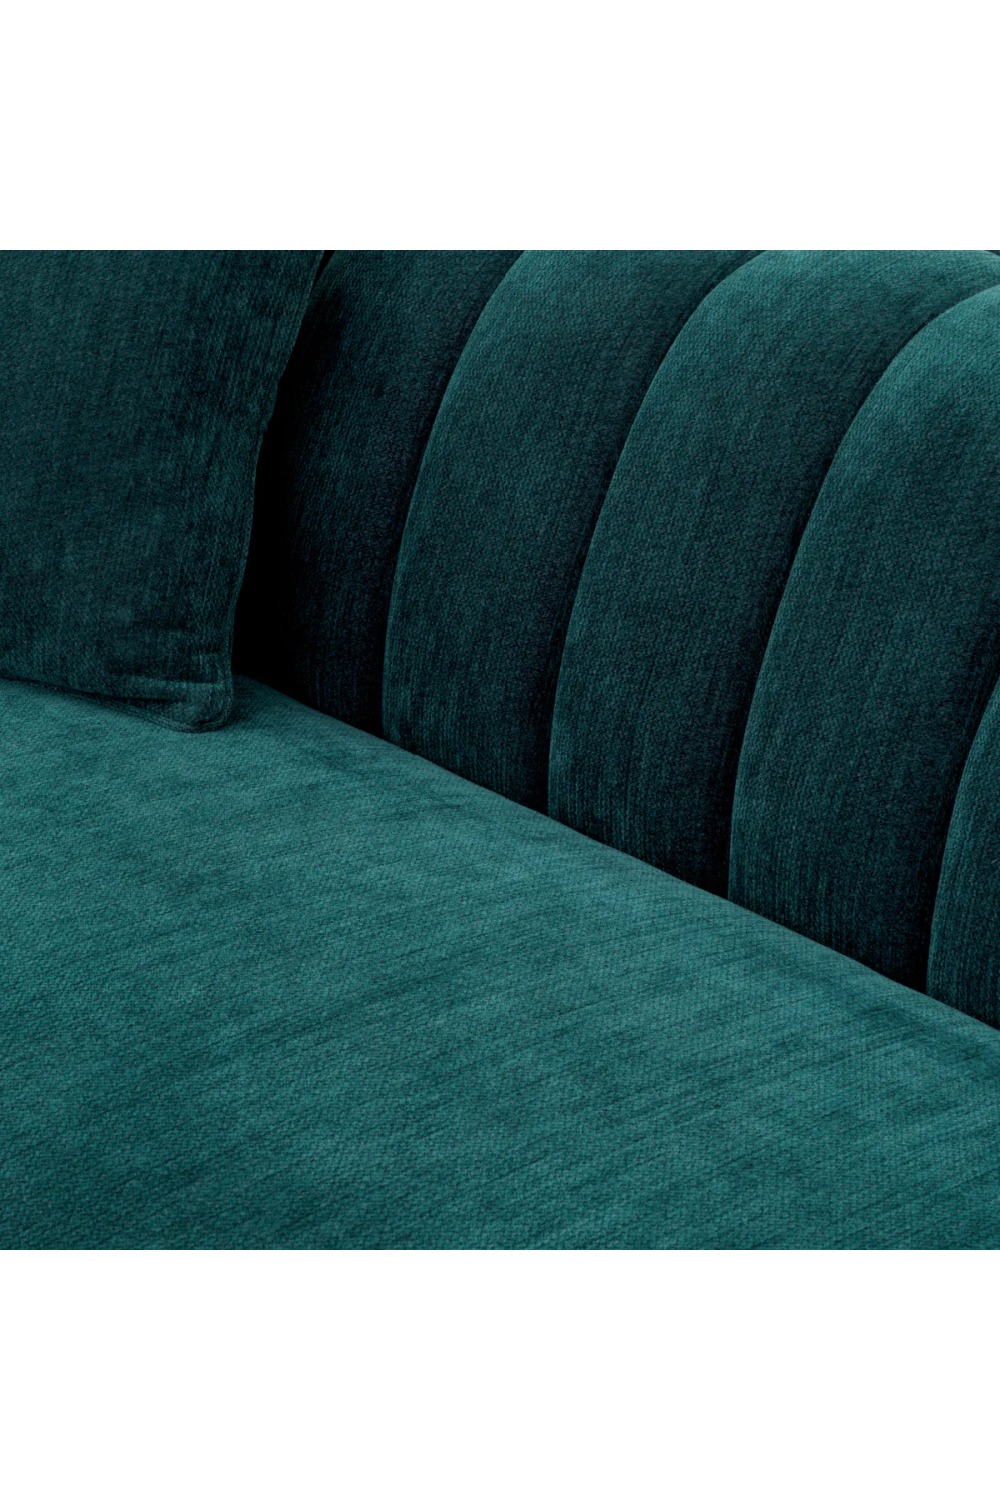 Channel Stitched Curve Sofa | Eichholtz Agostino | Oroa.com